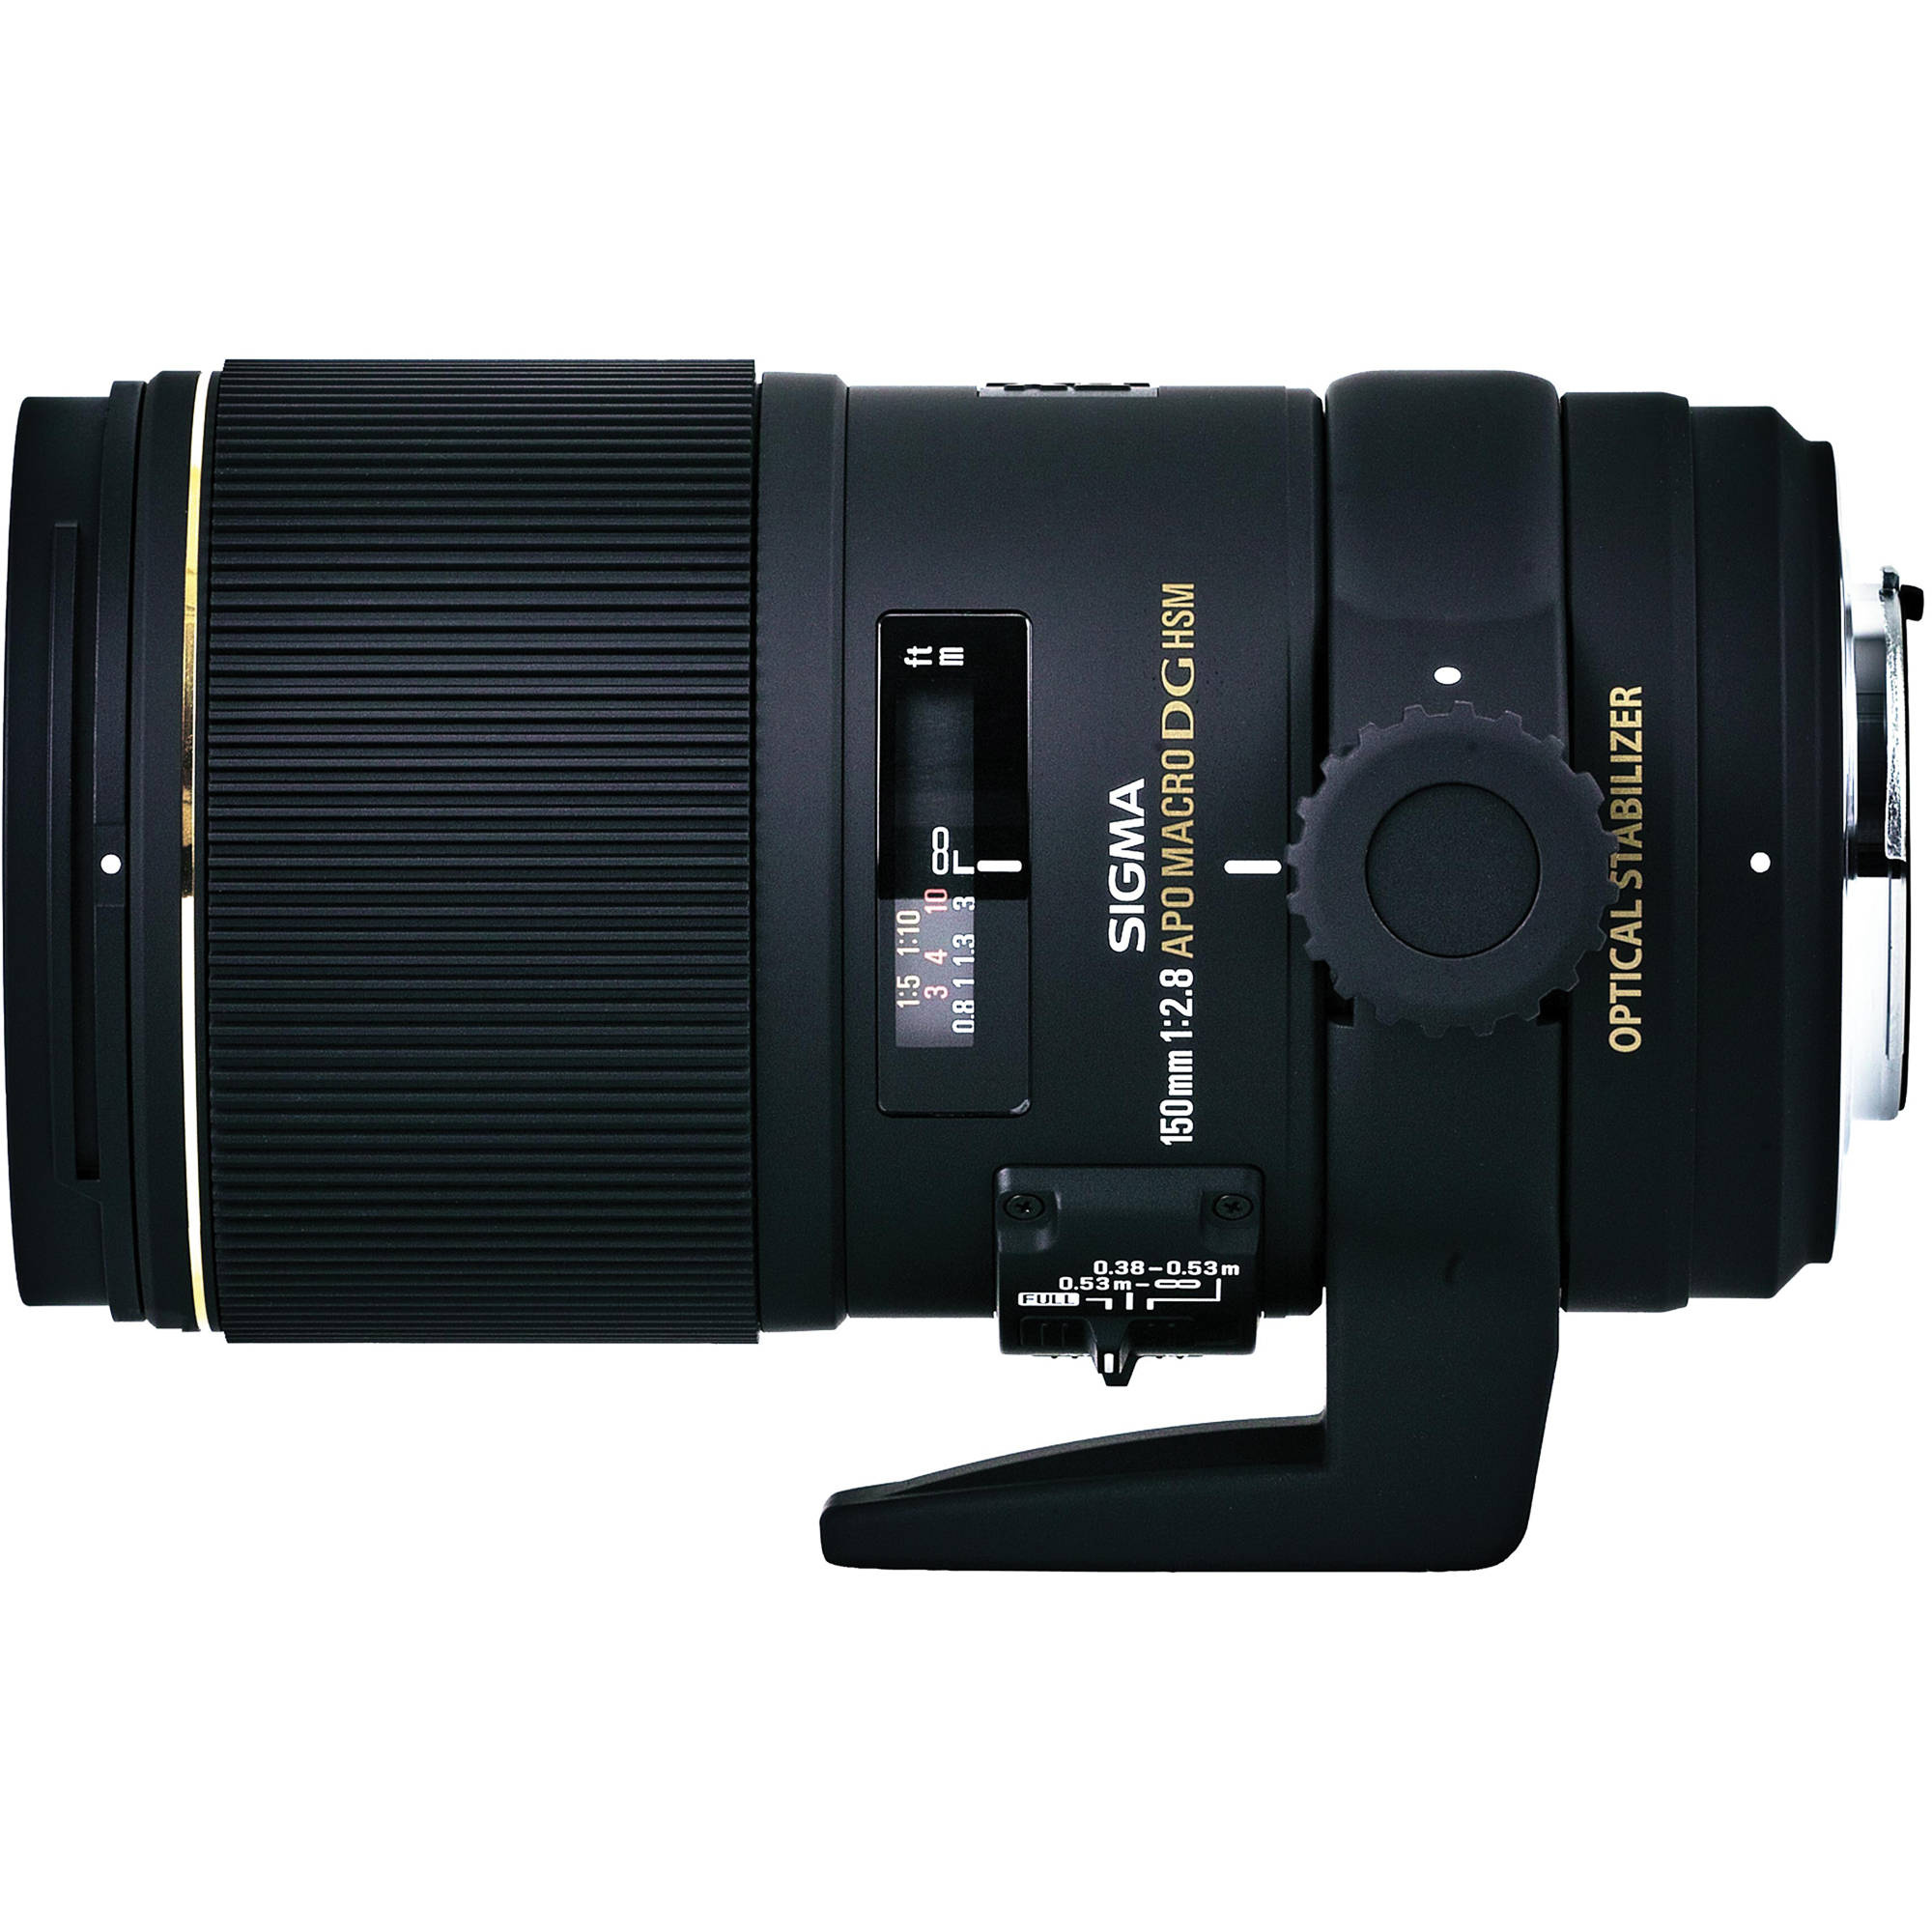 Sigma 150mm f/2.8 EX DG OS HSM APO Macro Lens (For Nikon)